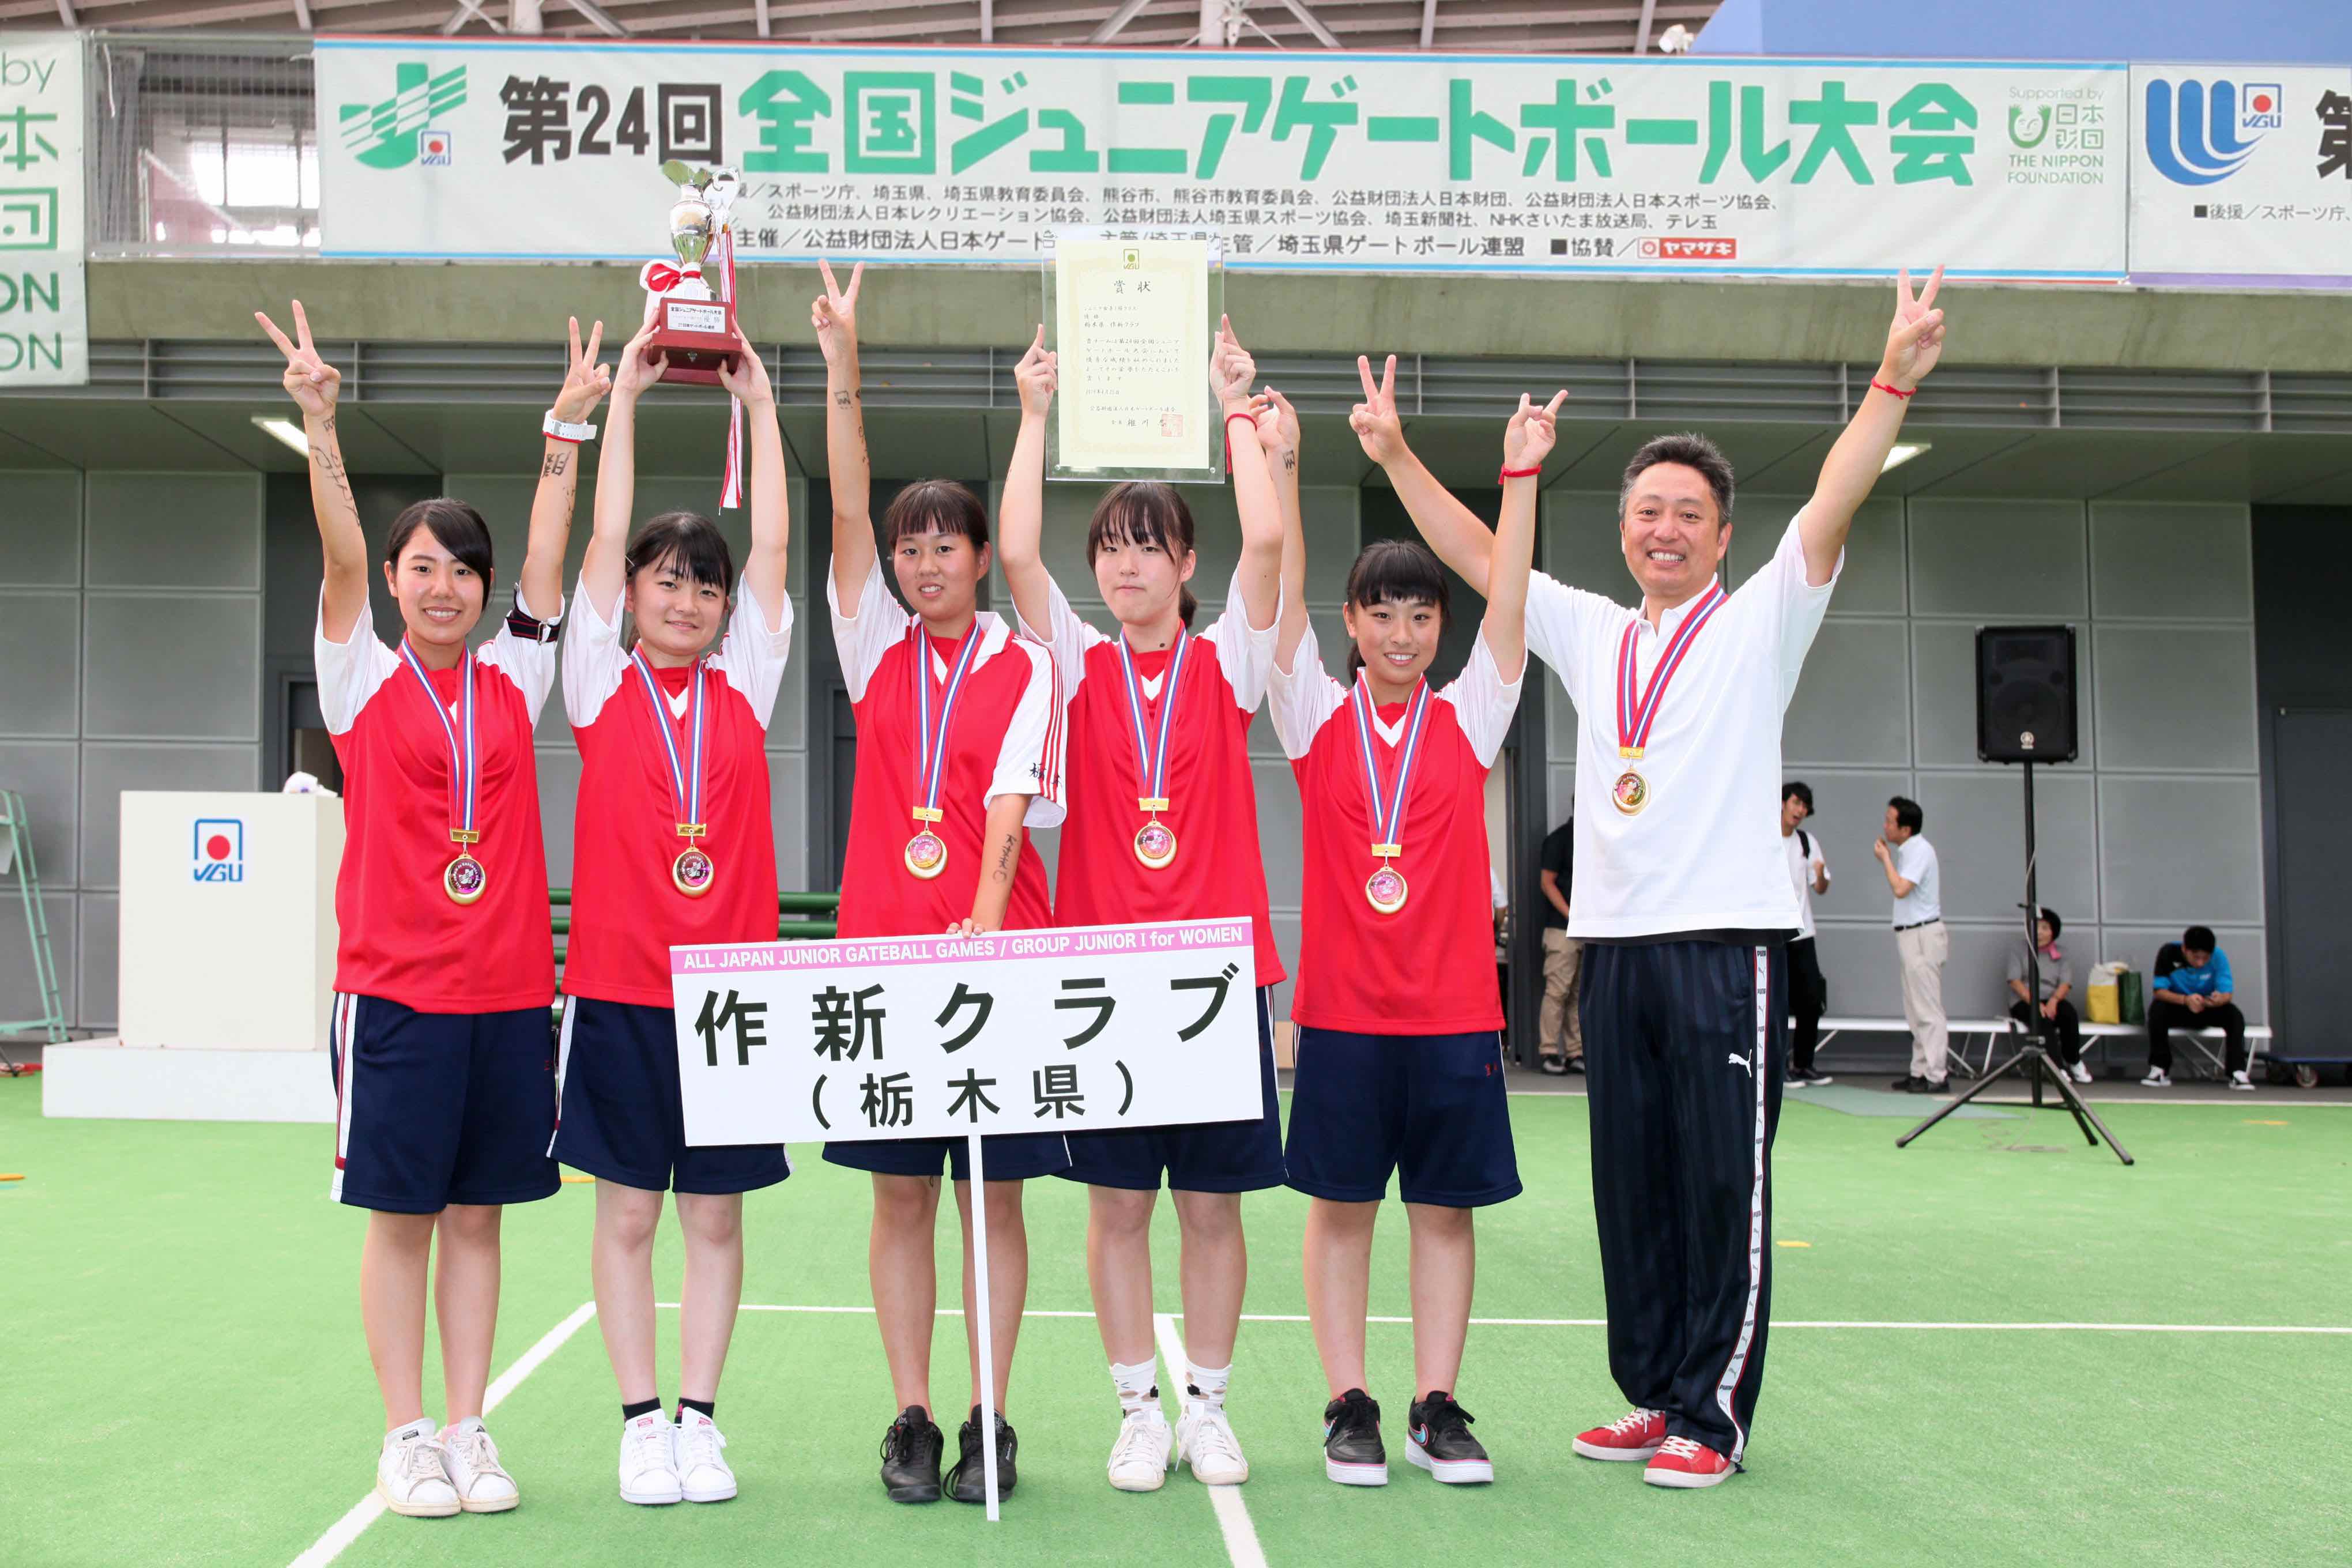 24th All Japan Jr Gateball Games Gateball Open Tournaments Wgu World Gateball Union Official Web Site